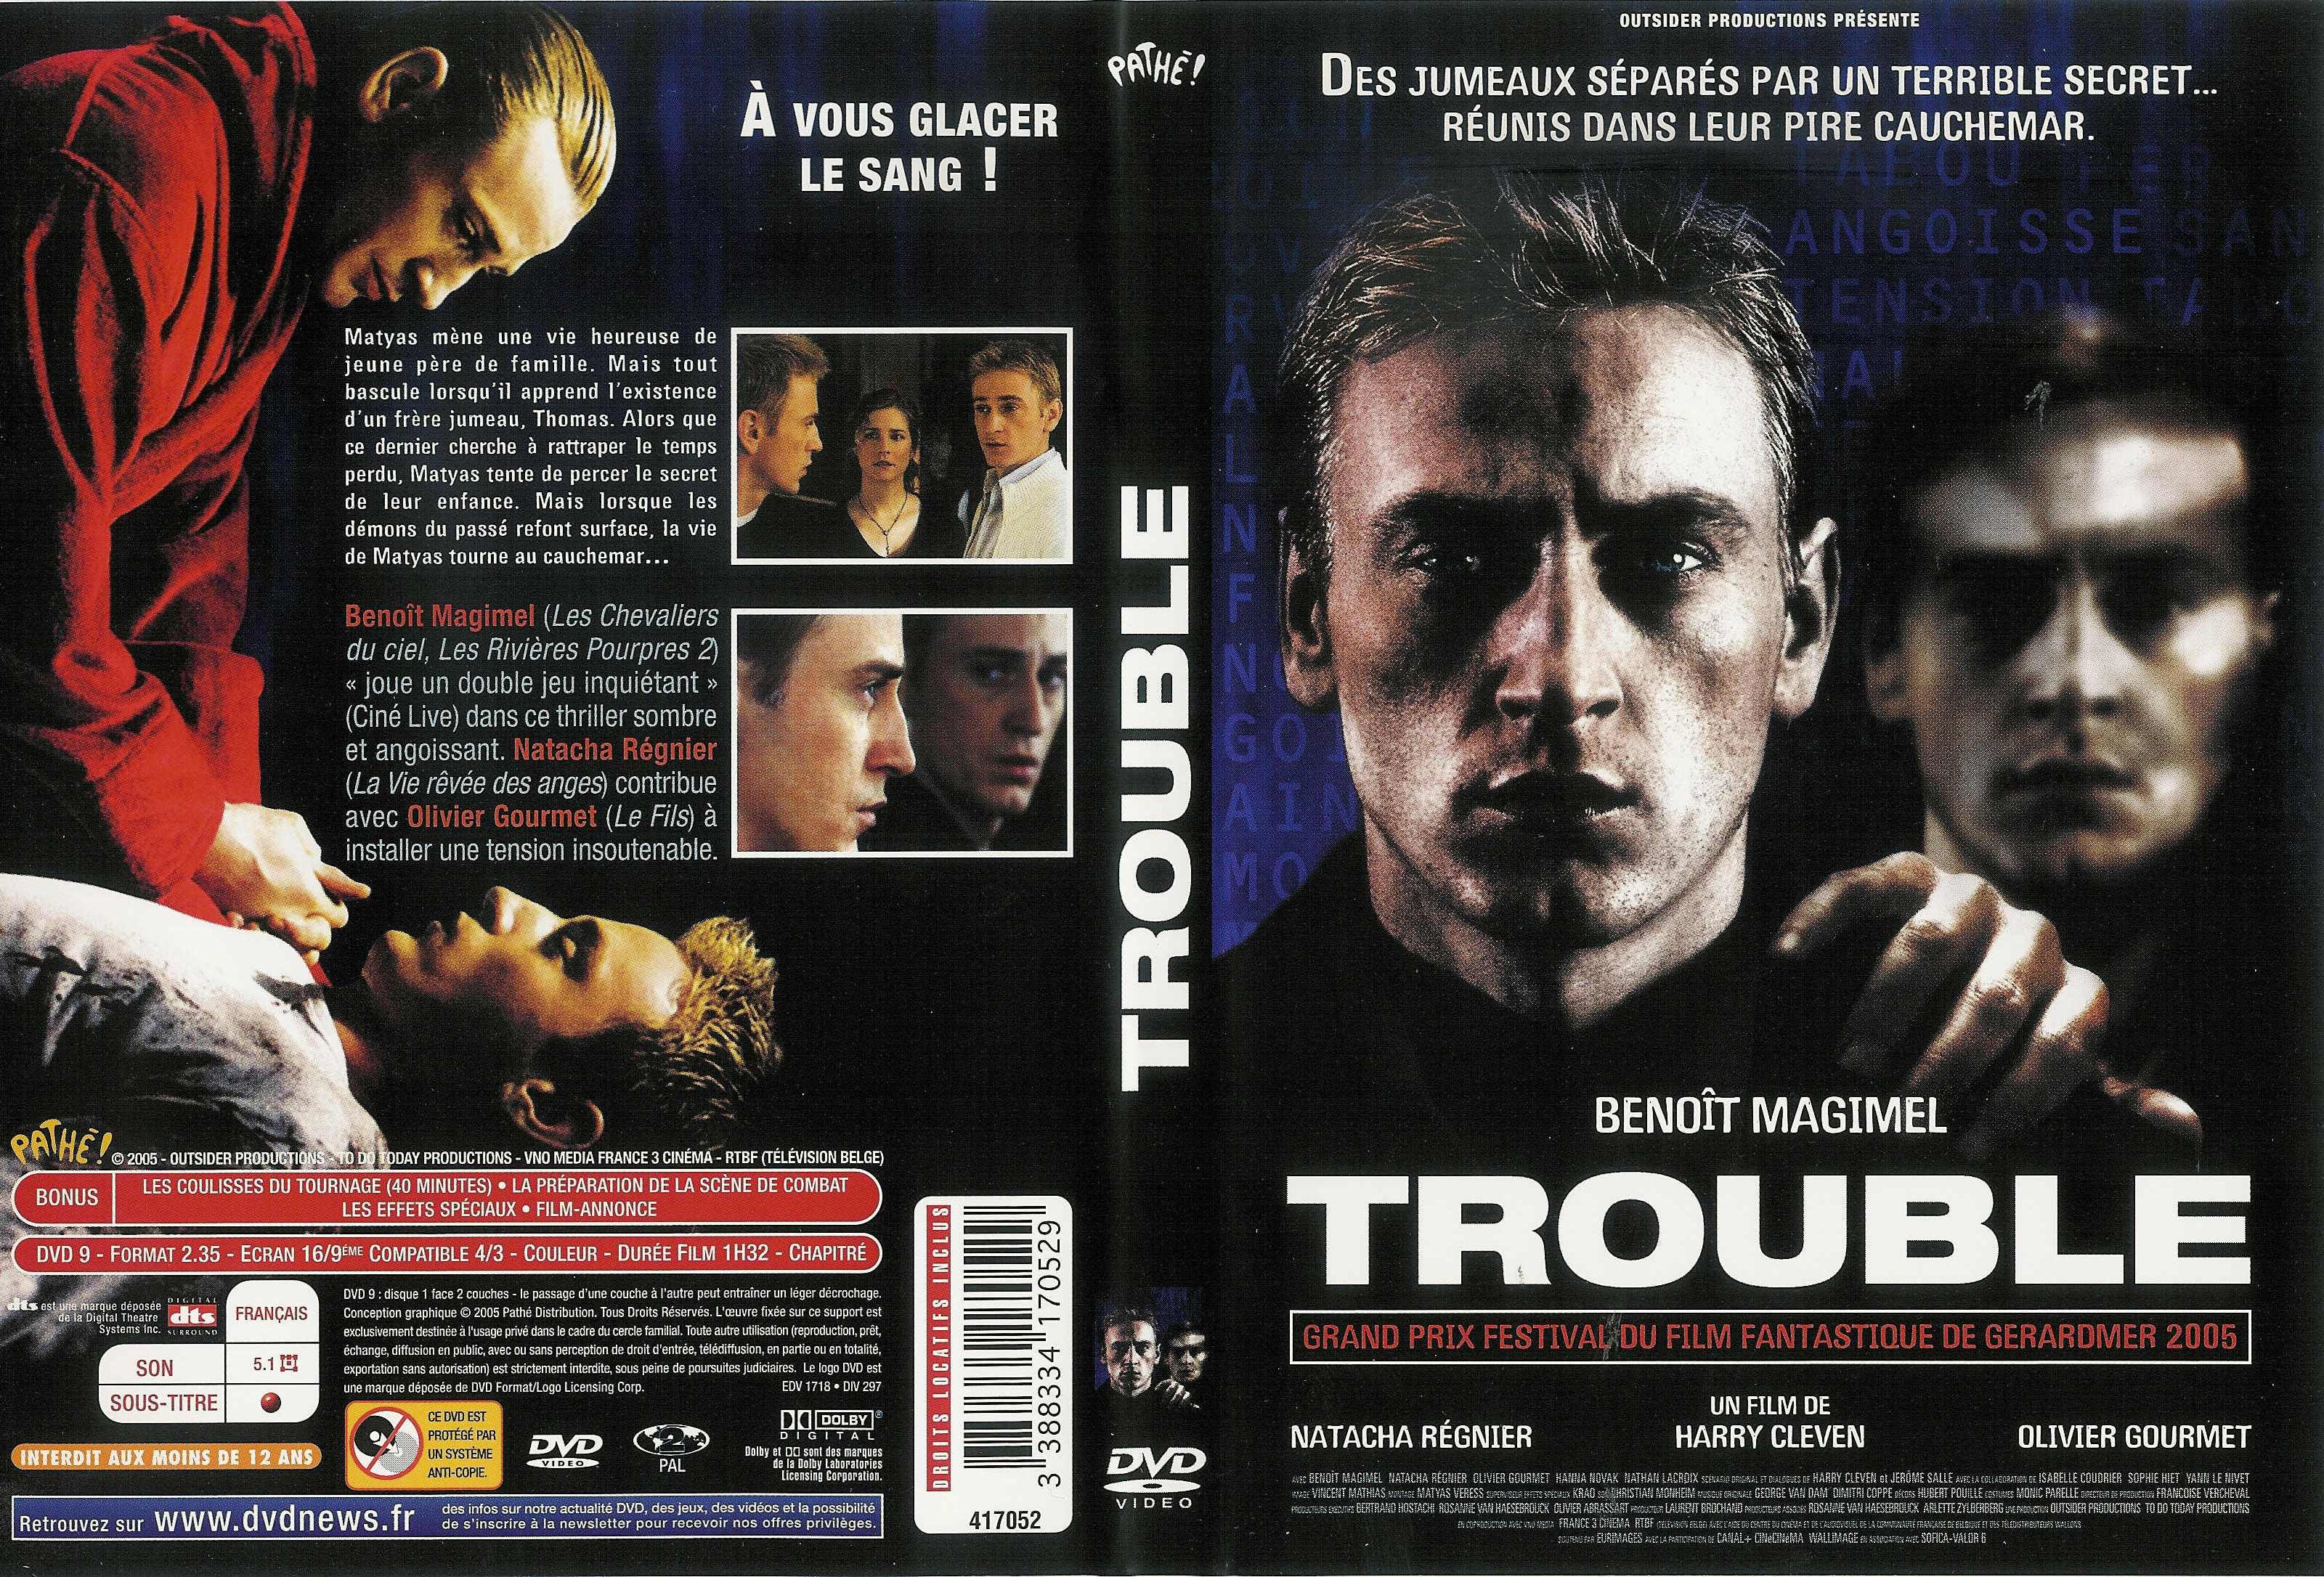 Jaquette DVD Trouble v2